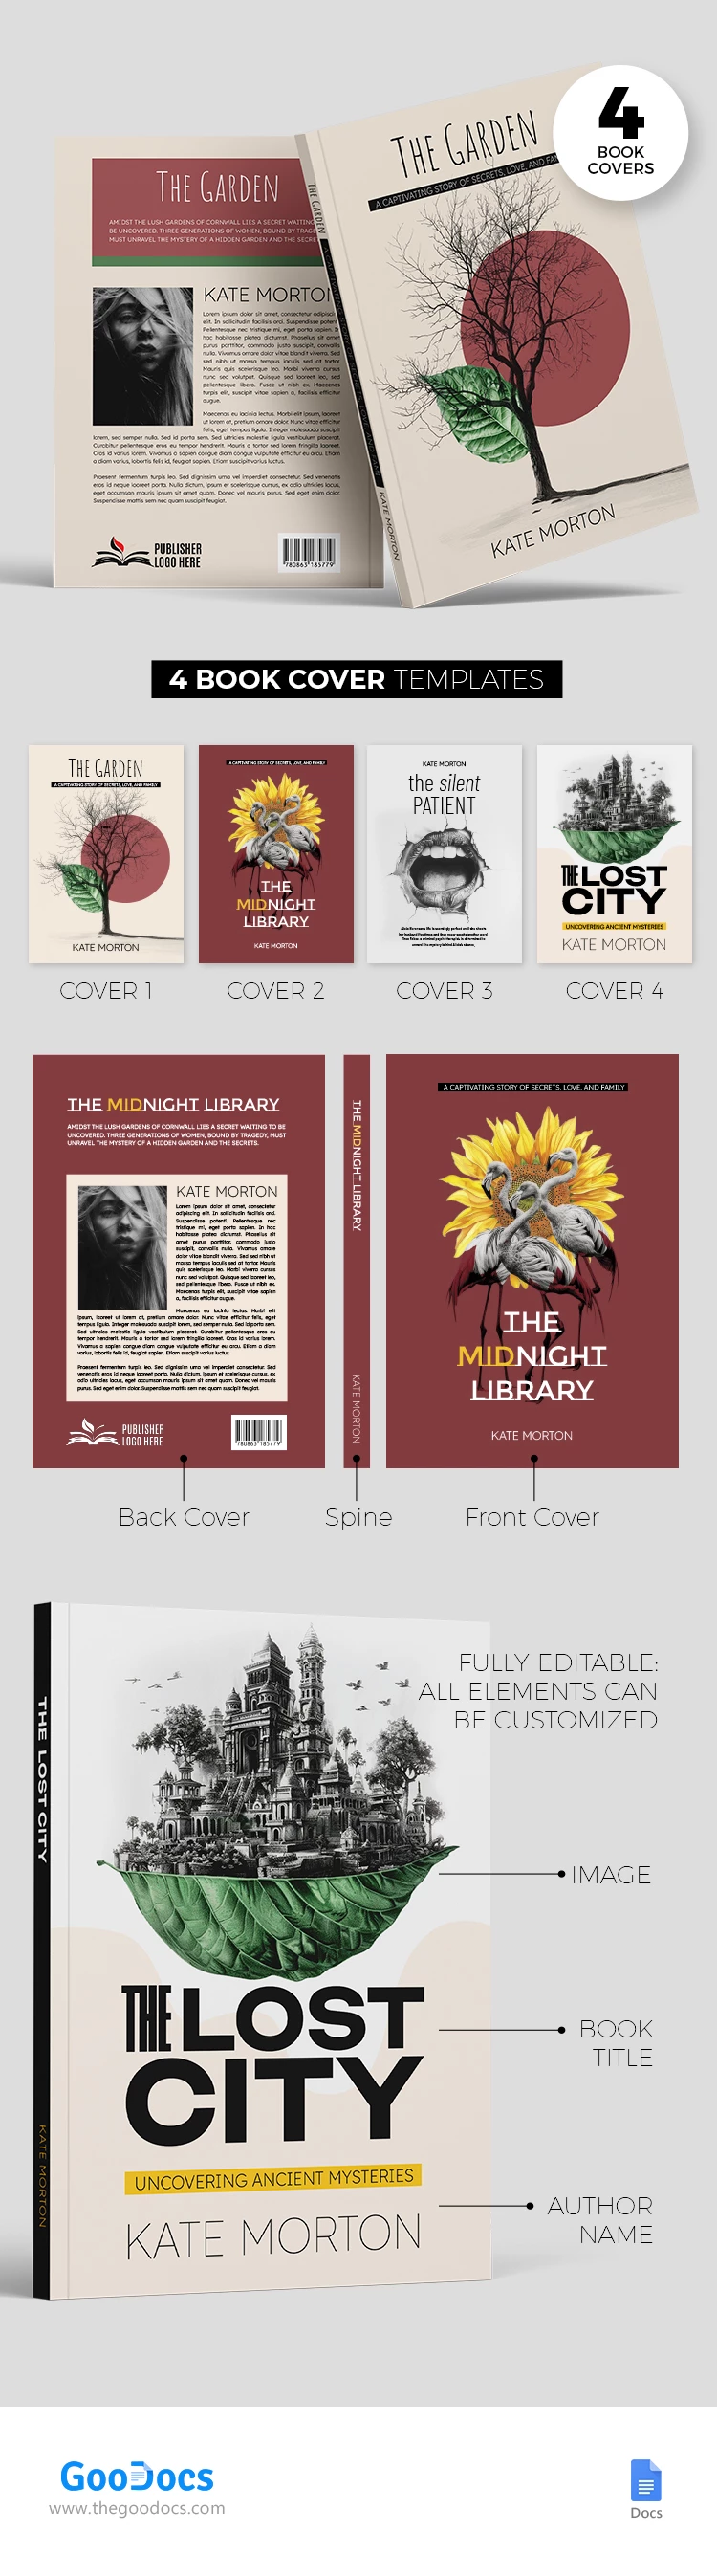 Stylish Books Cover - free Google Docs Template - 10068653